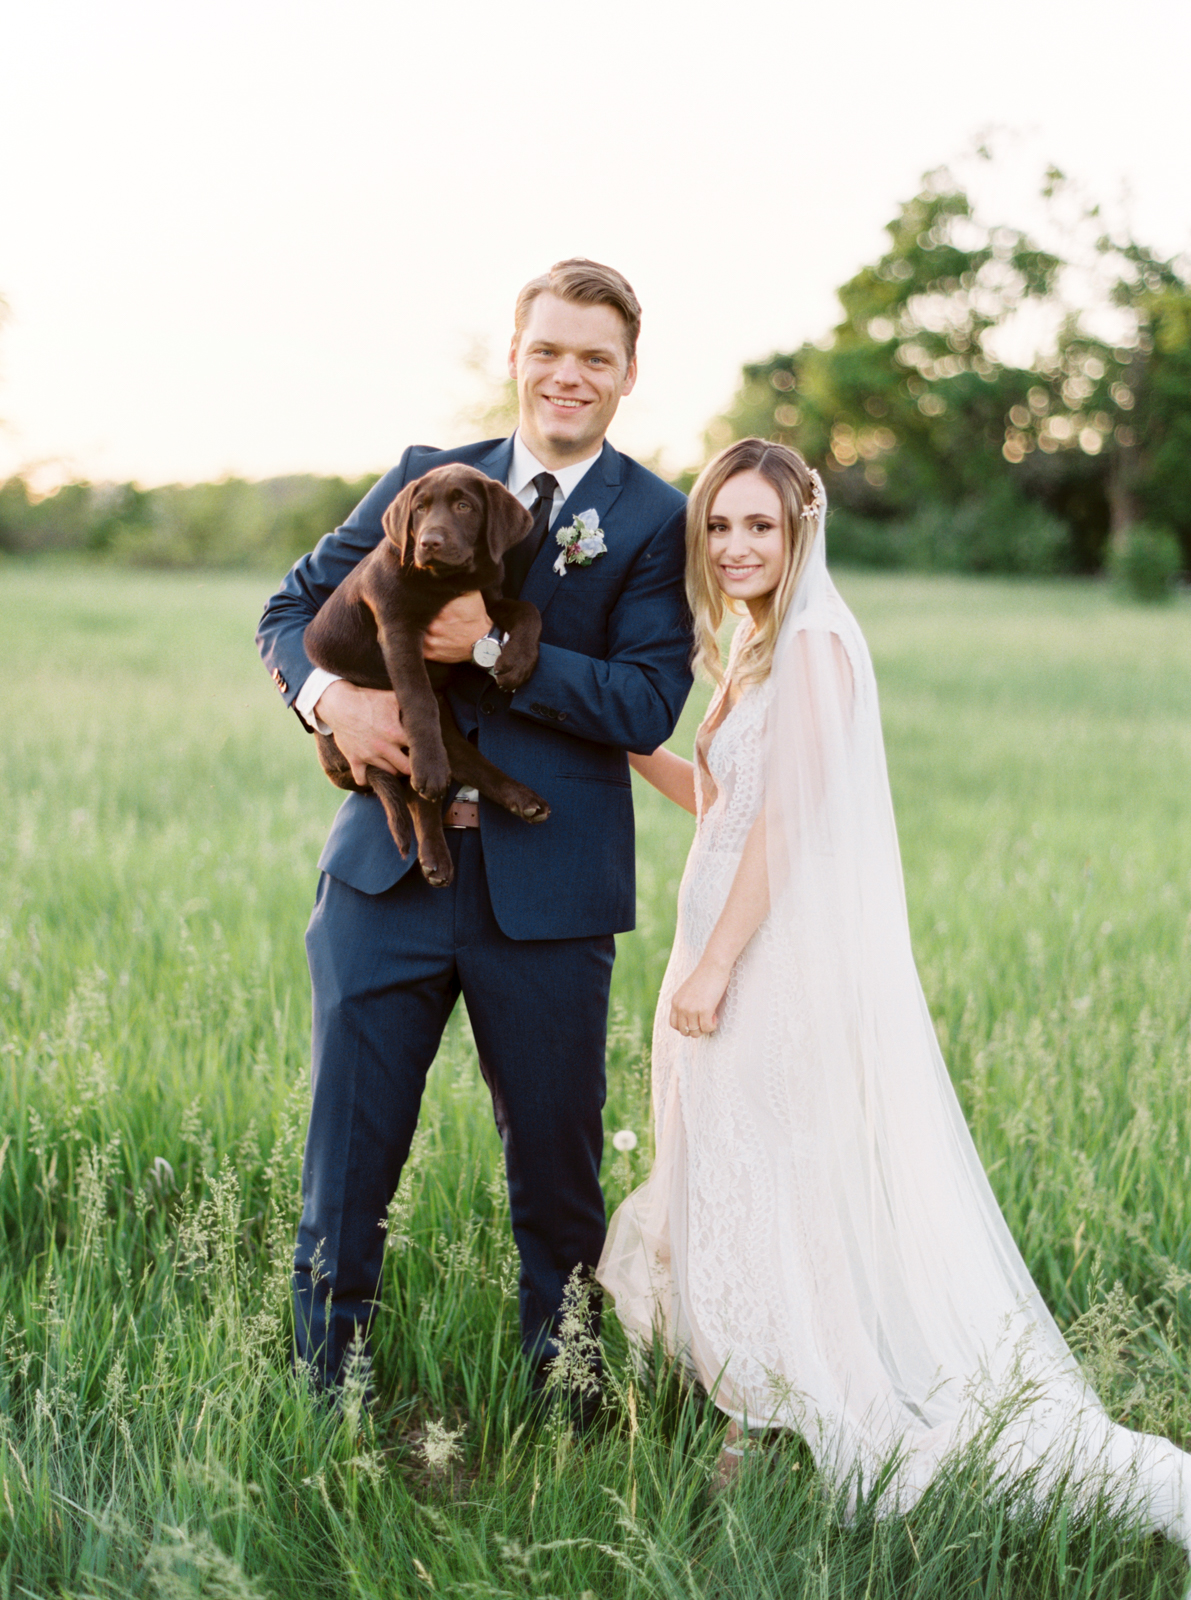 Wedding Puppy | Elora Wedding Photographer | Chocolate Lab Puppy Wedding | Kayla Yestal www.kaylayestal.com